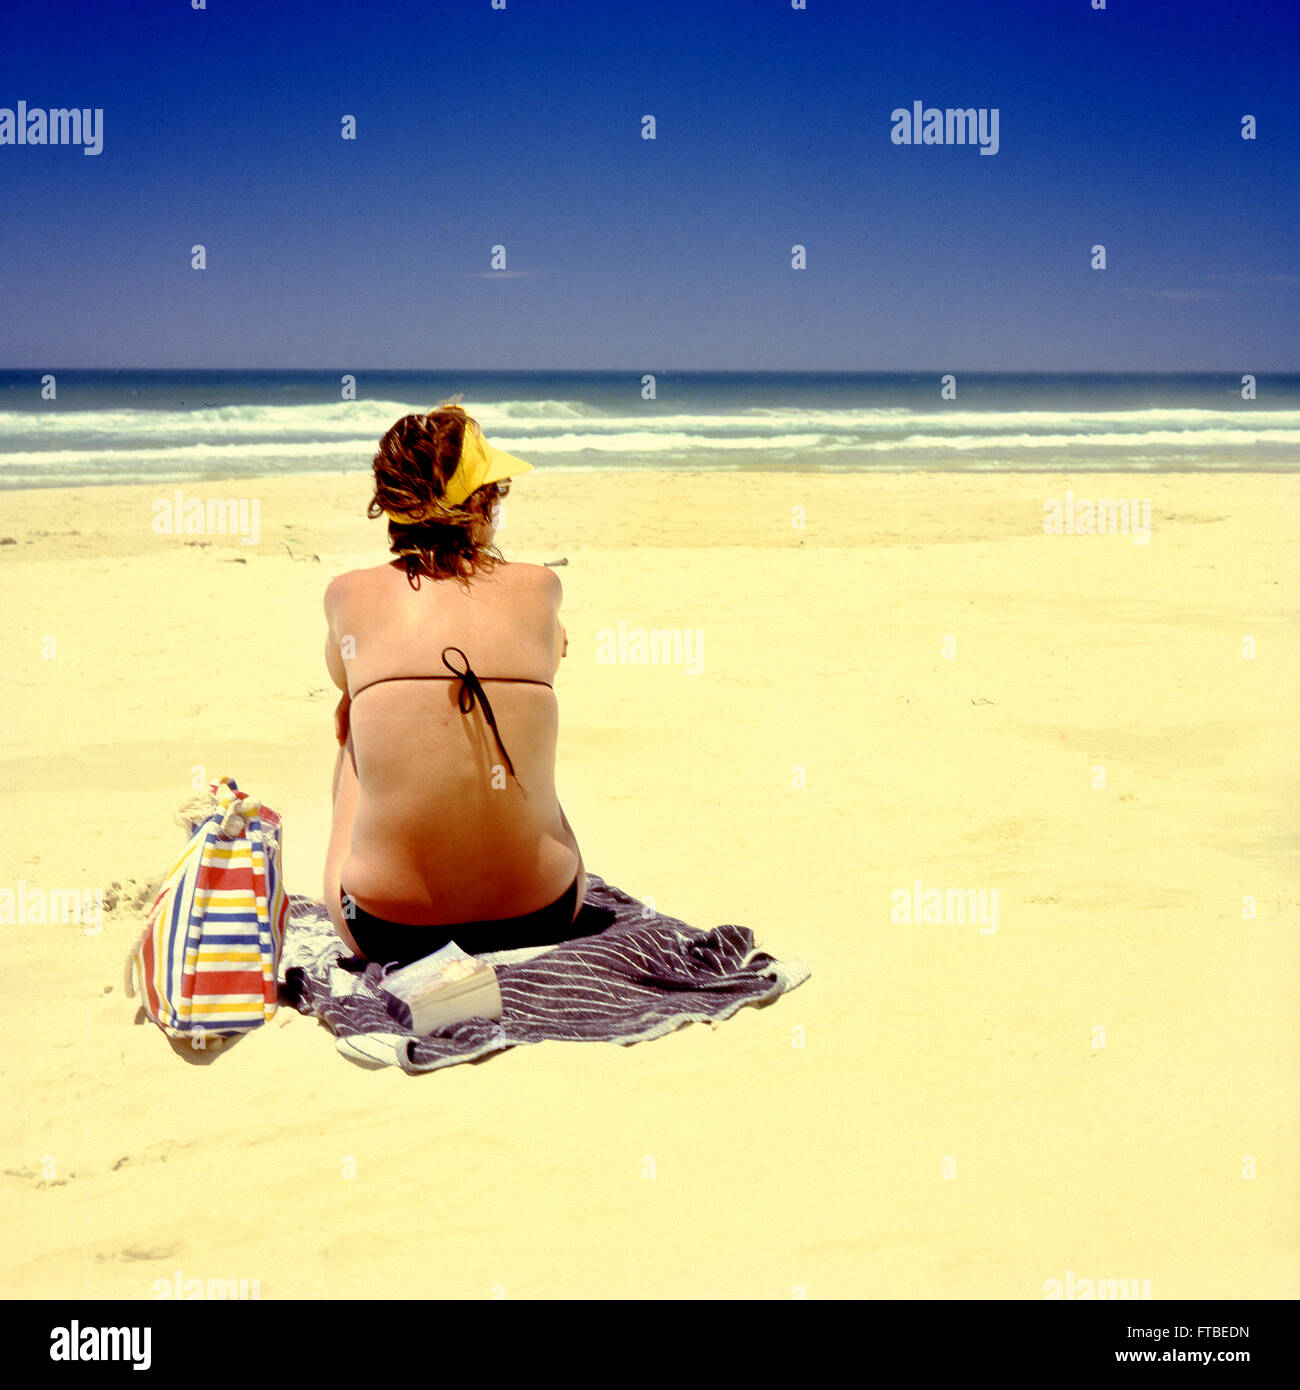 Bikini beach hi-res stock photography and images image